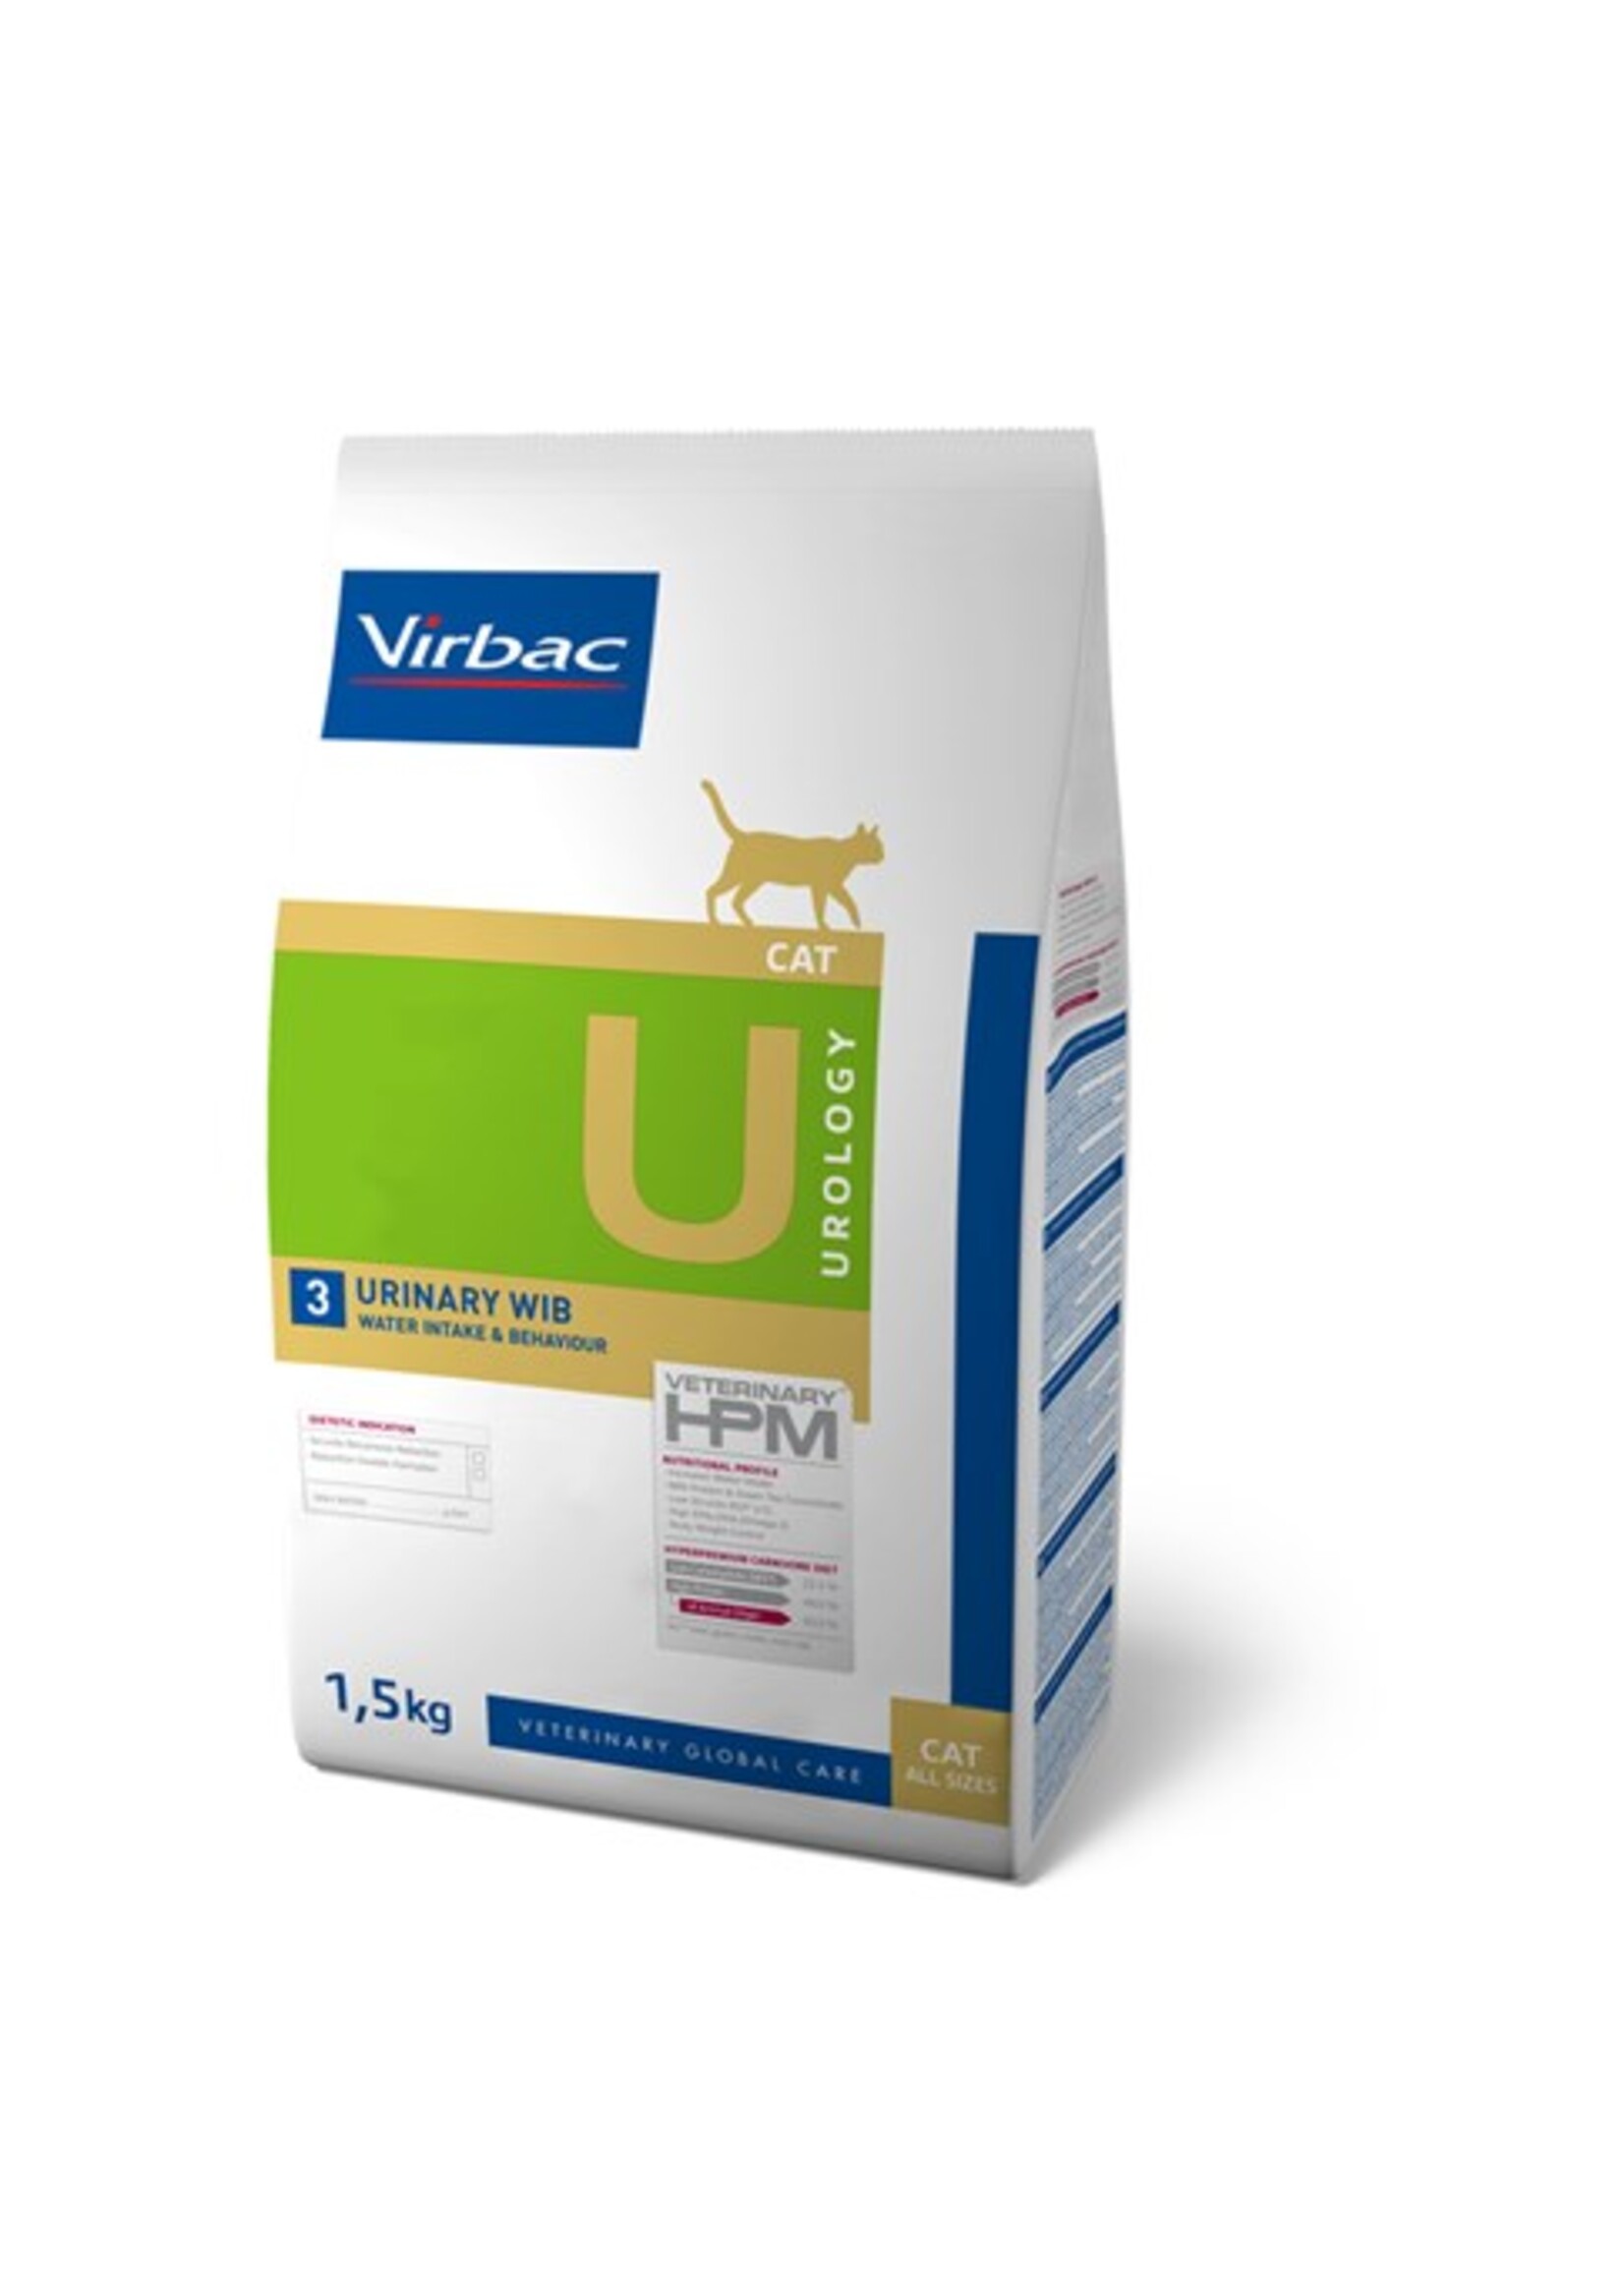 Virbac Virbac Hpm Kat Urology Urinary Wib U3 3kg